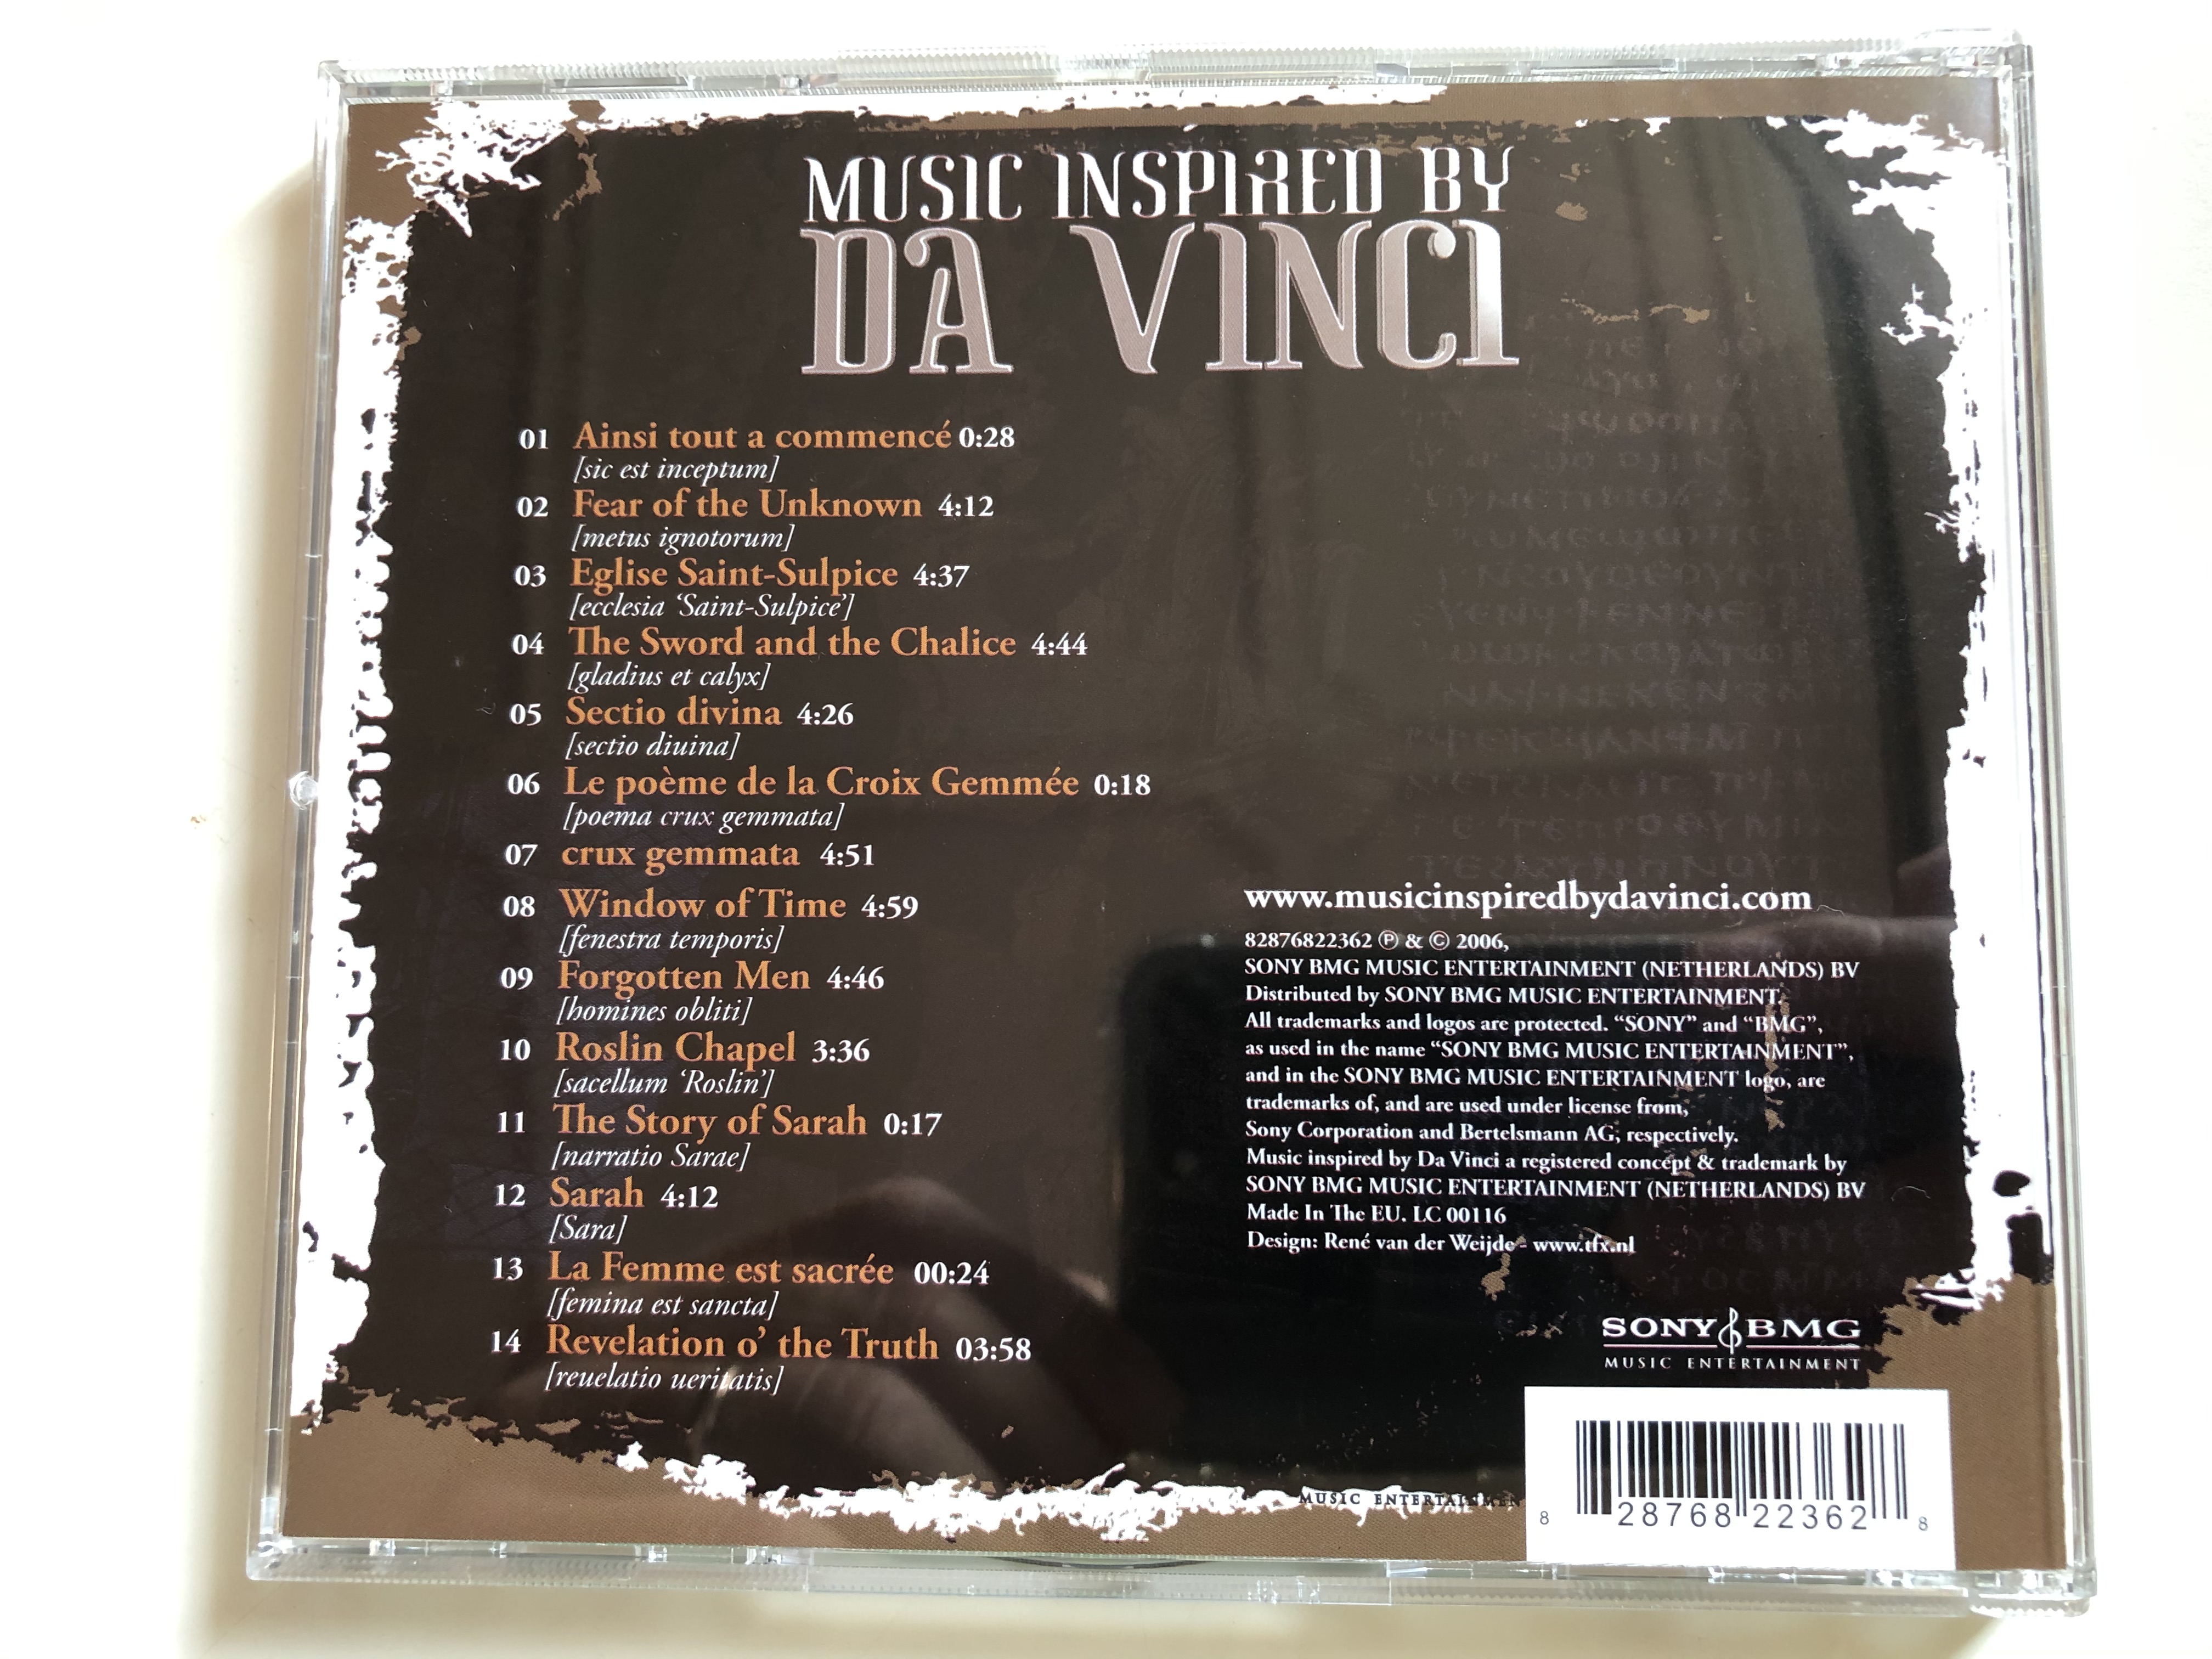 music-inspired-by-da-vinci-sony-bmg-music-entertainment-audio-cd-2006-82876822362-9-.jpg